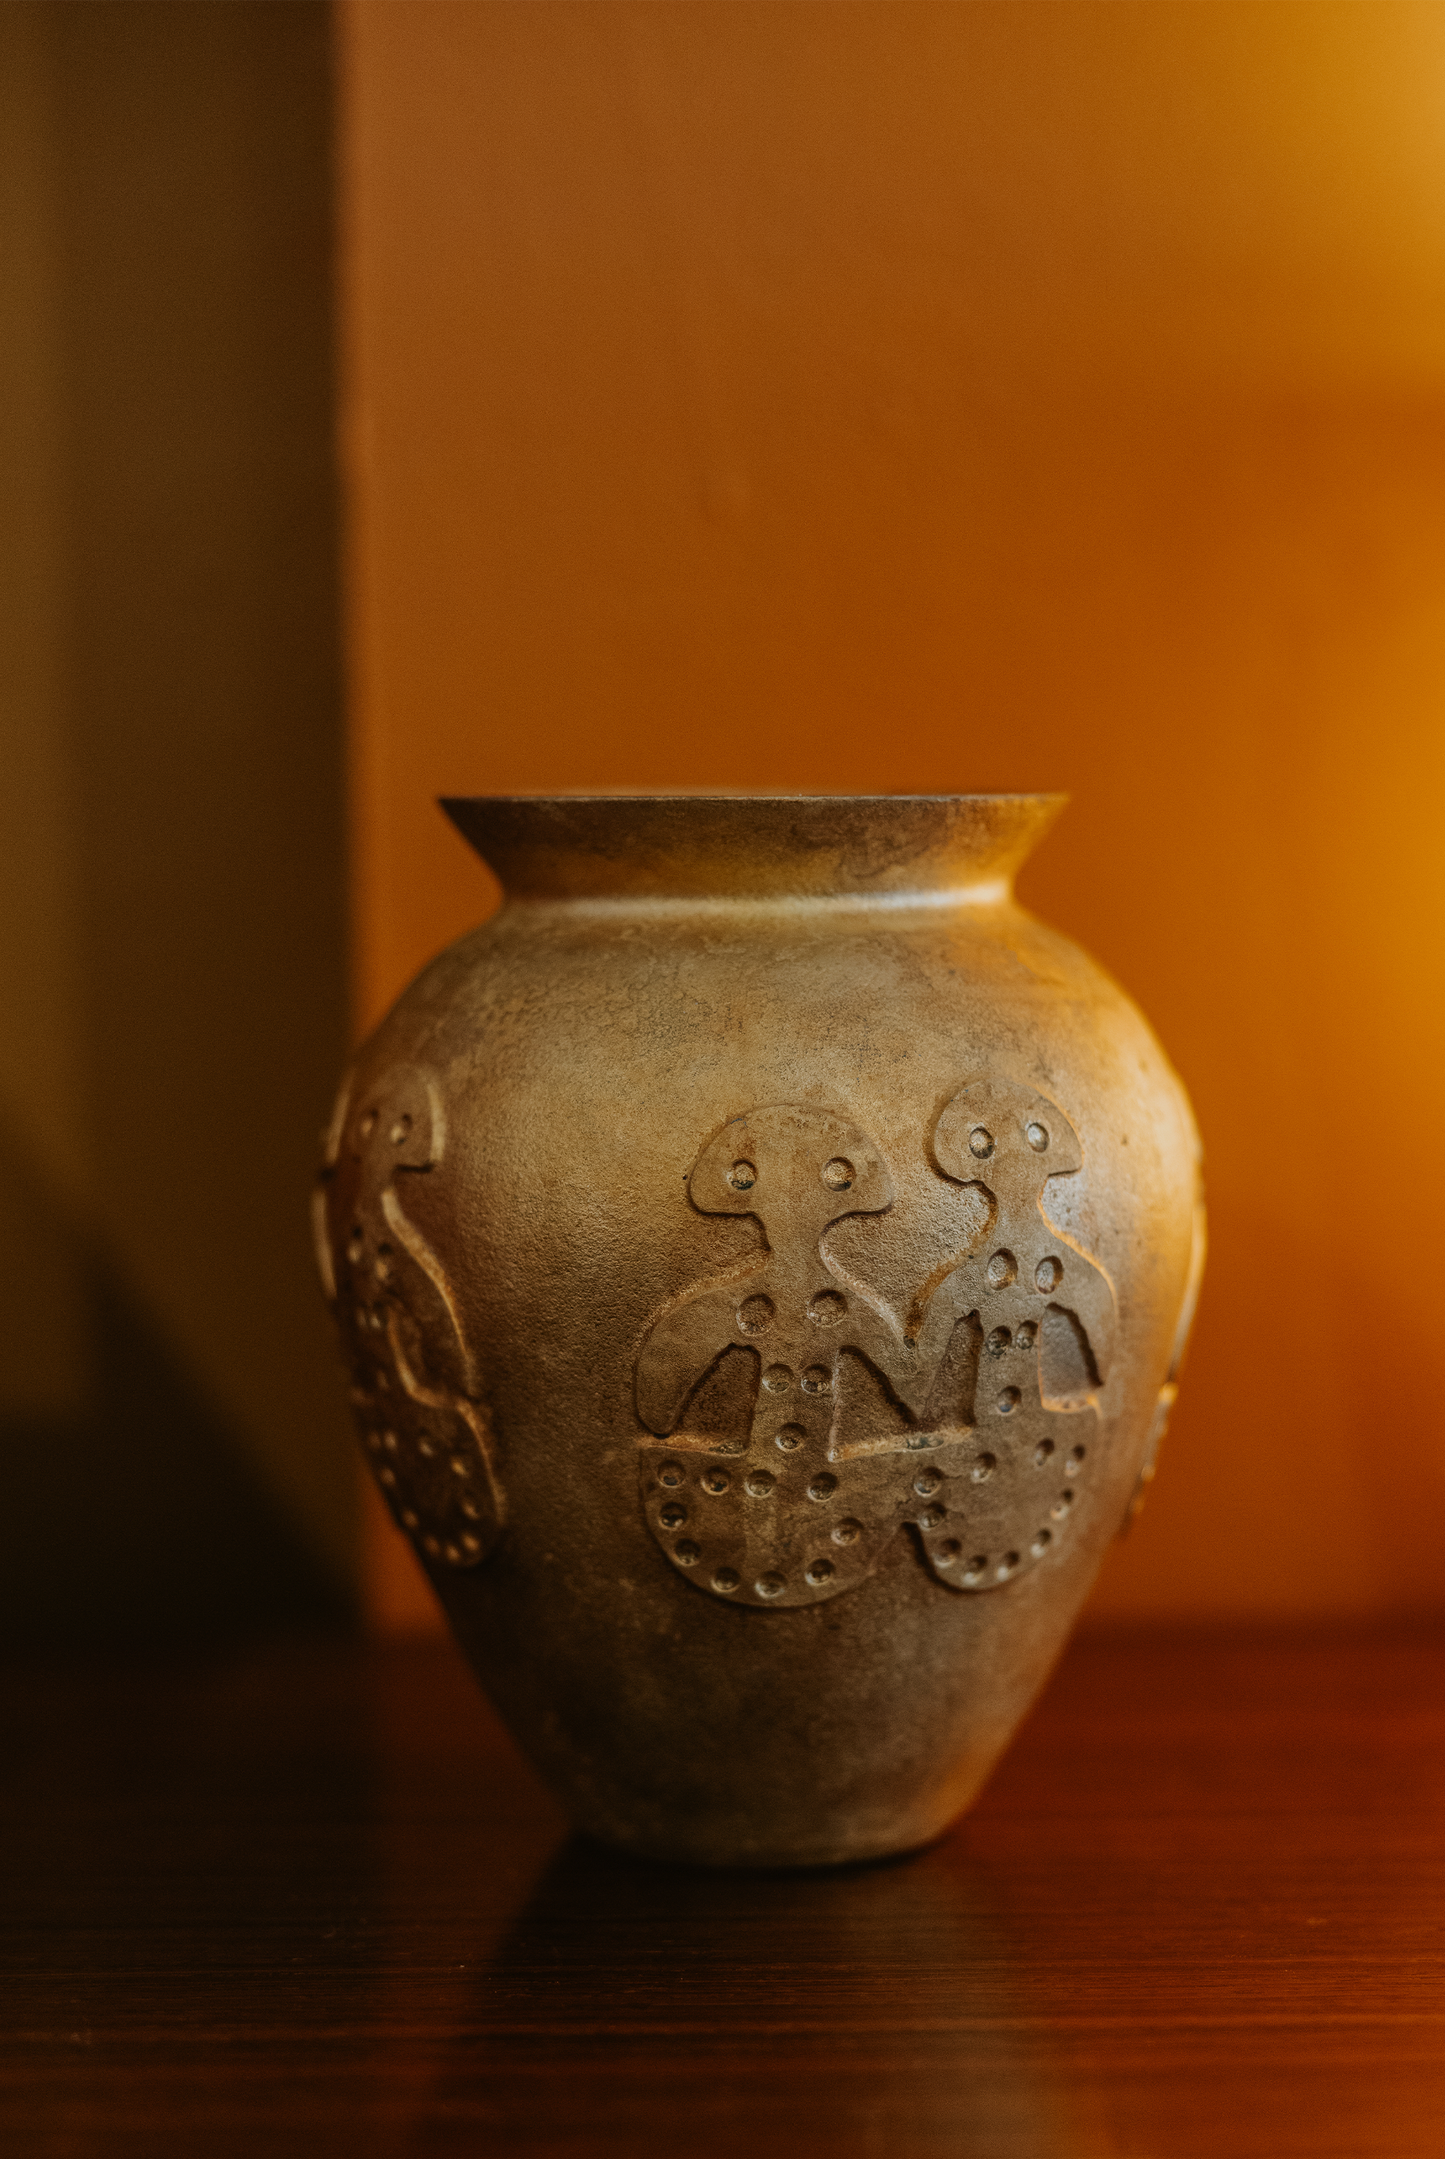 Gold Etched Glass Vase